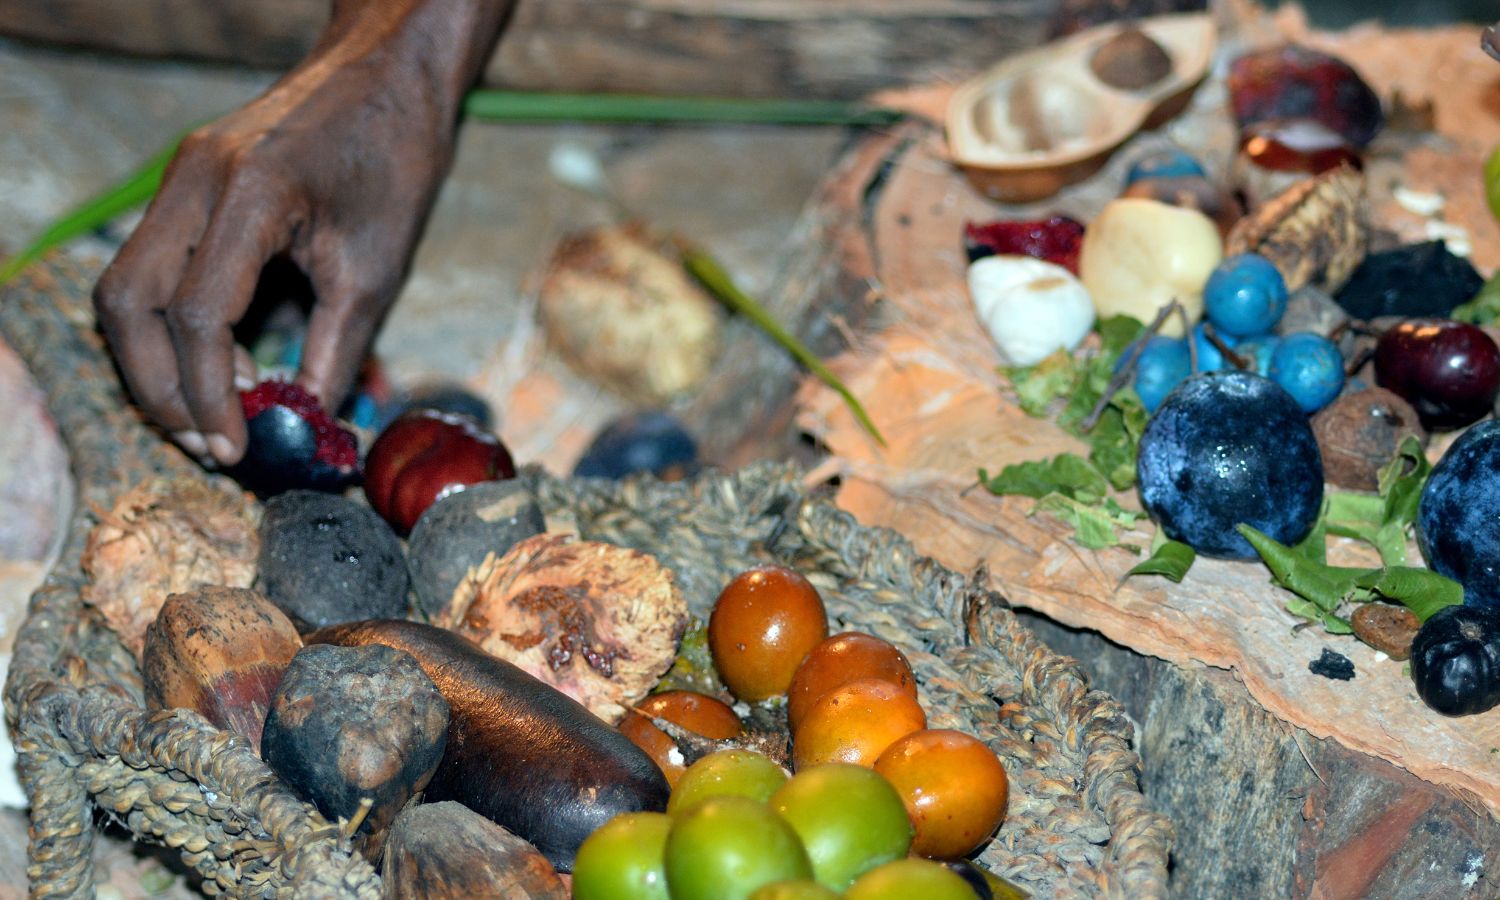 An image showing native Australian Indigenous bush food